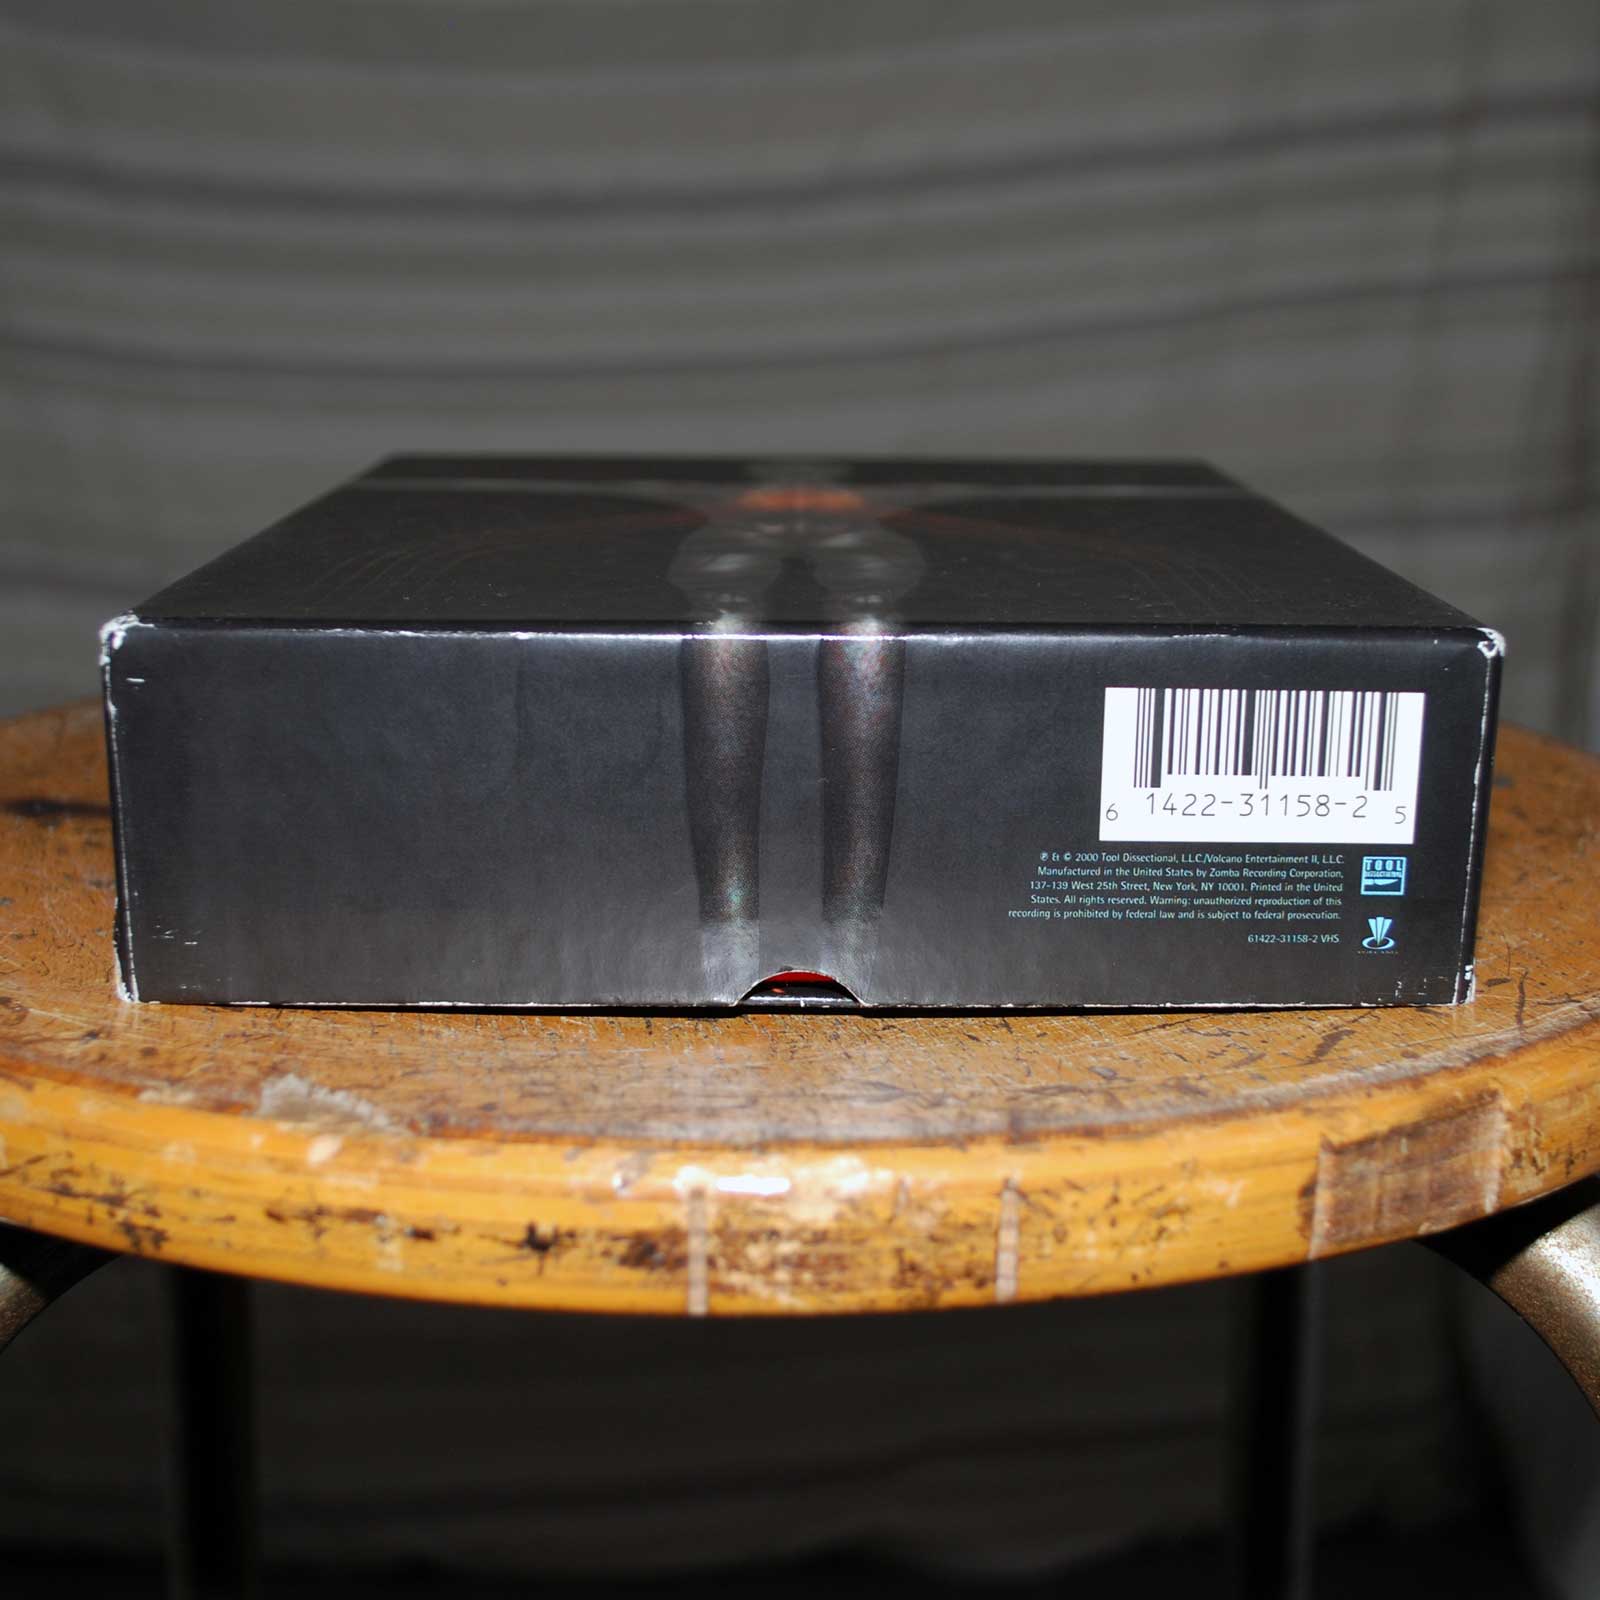 Tool Salival 2000 Red NTSC VHS Boxset US Volcano 61422-31158-2 missing CD 08